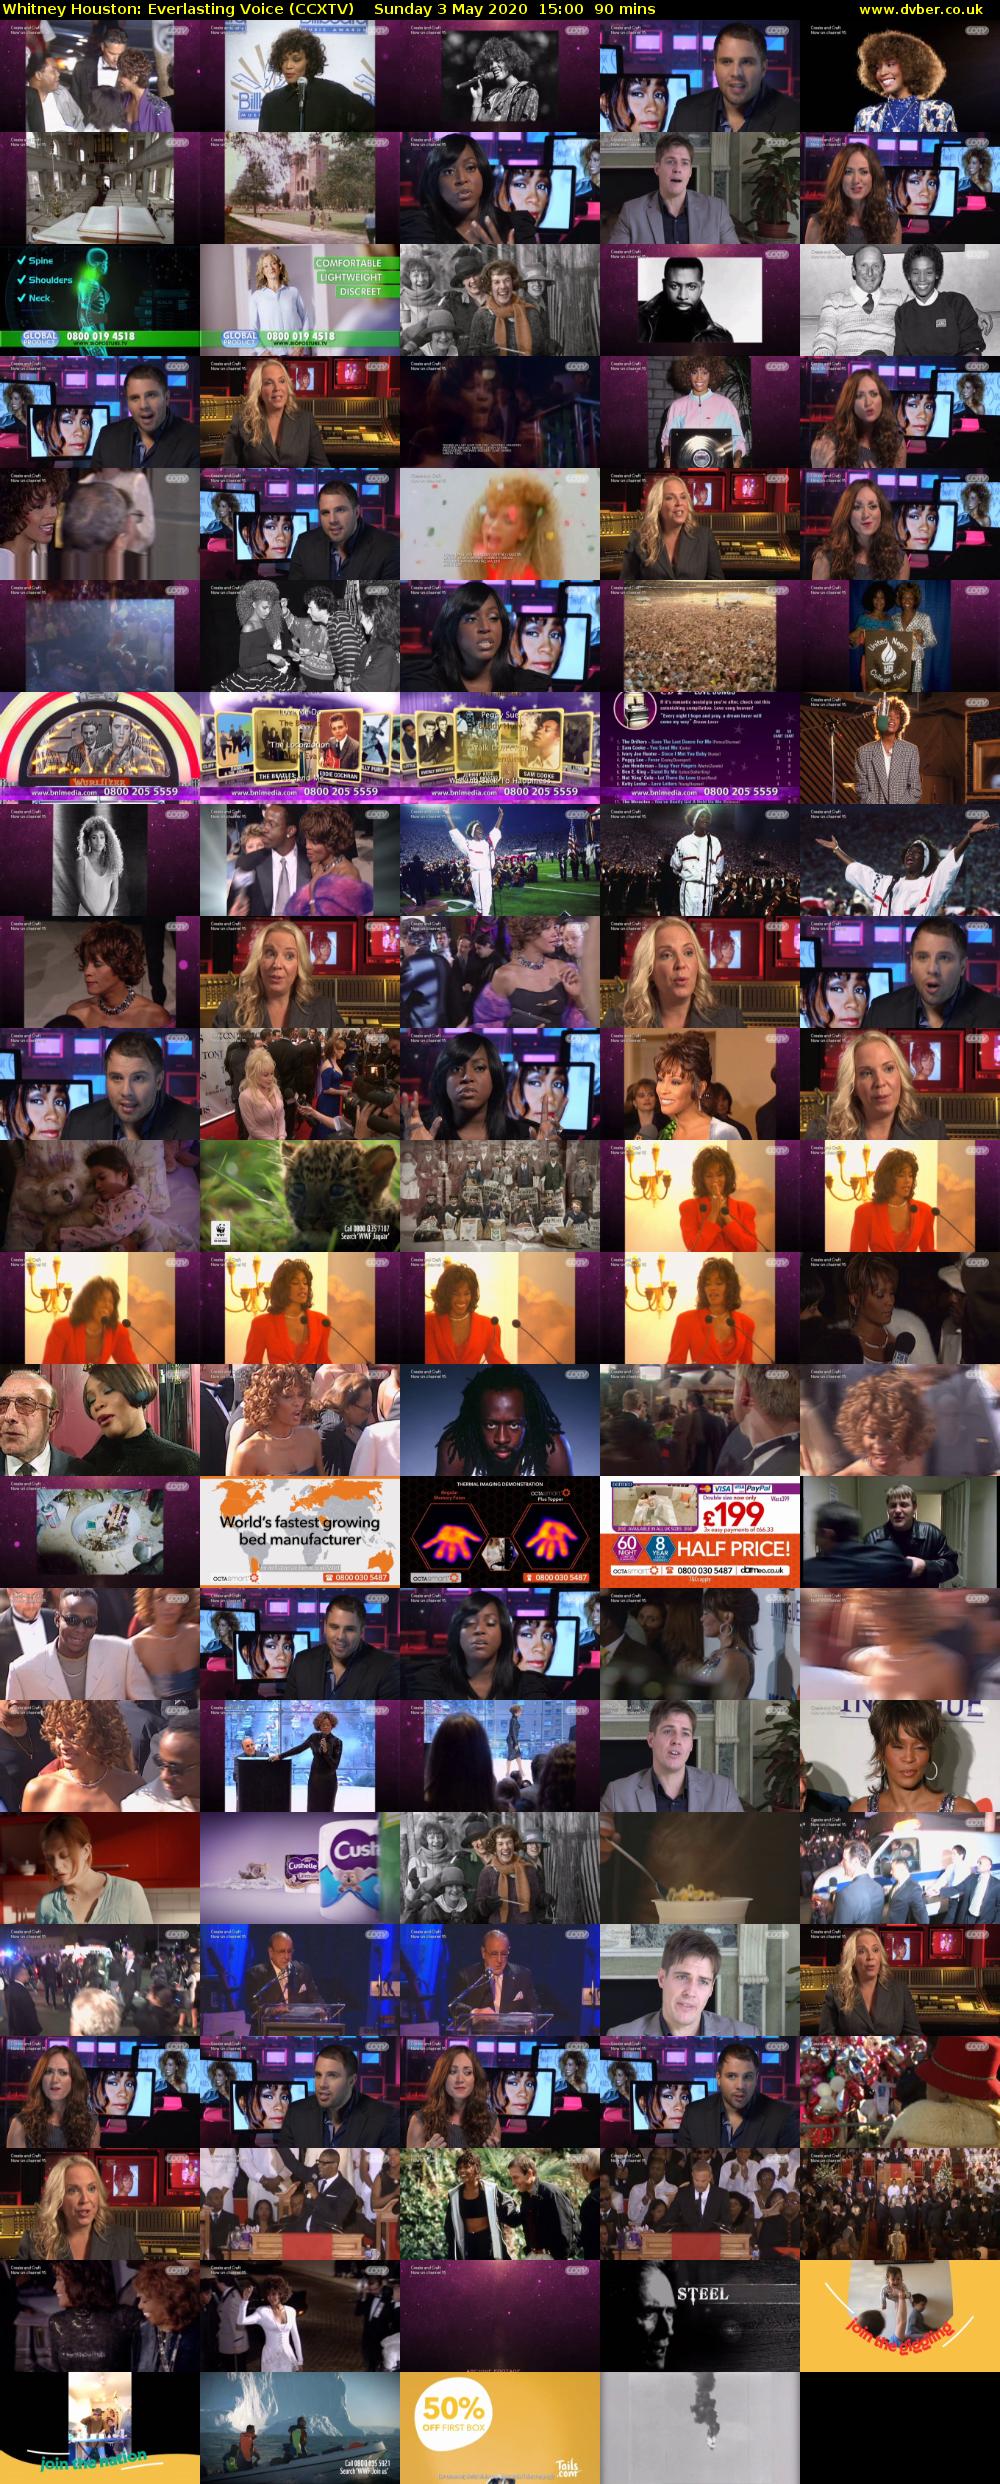 Whitney Houston: Everlasting Voice (CCXTV) Sunday 3 May 2020 15:00 - 16:30